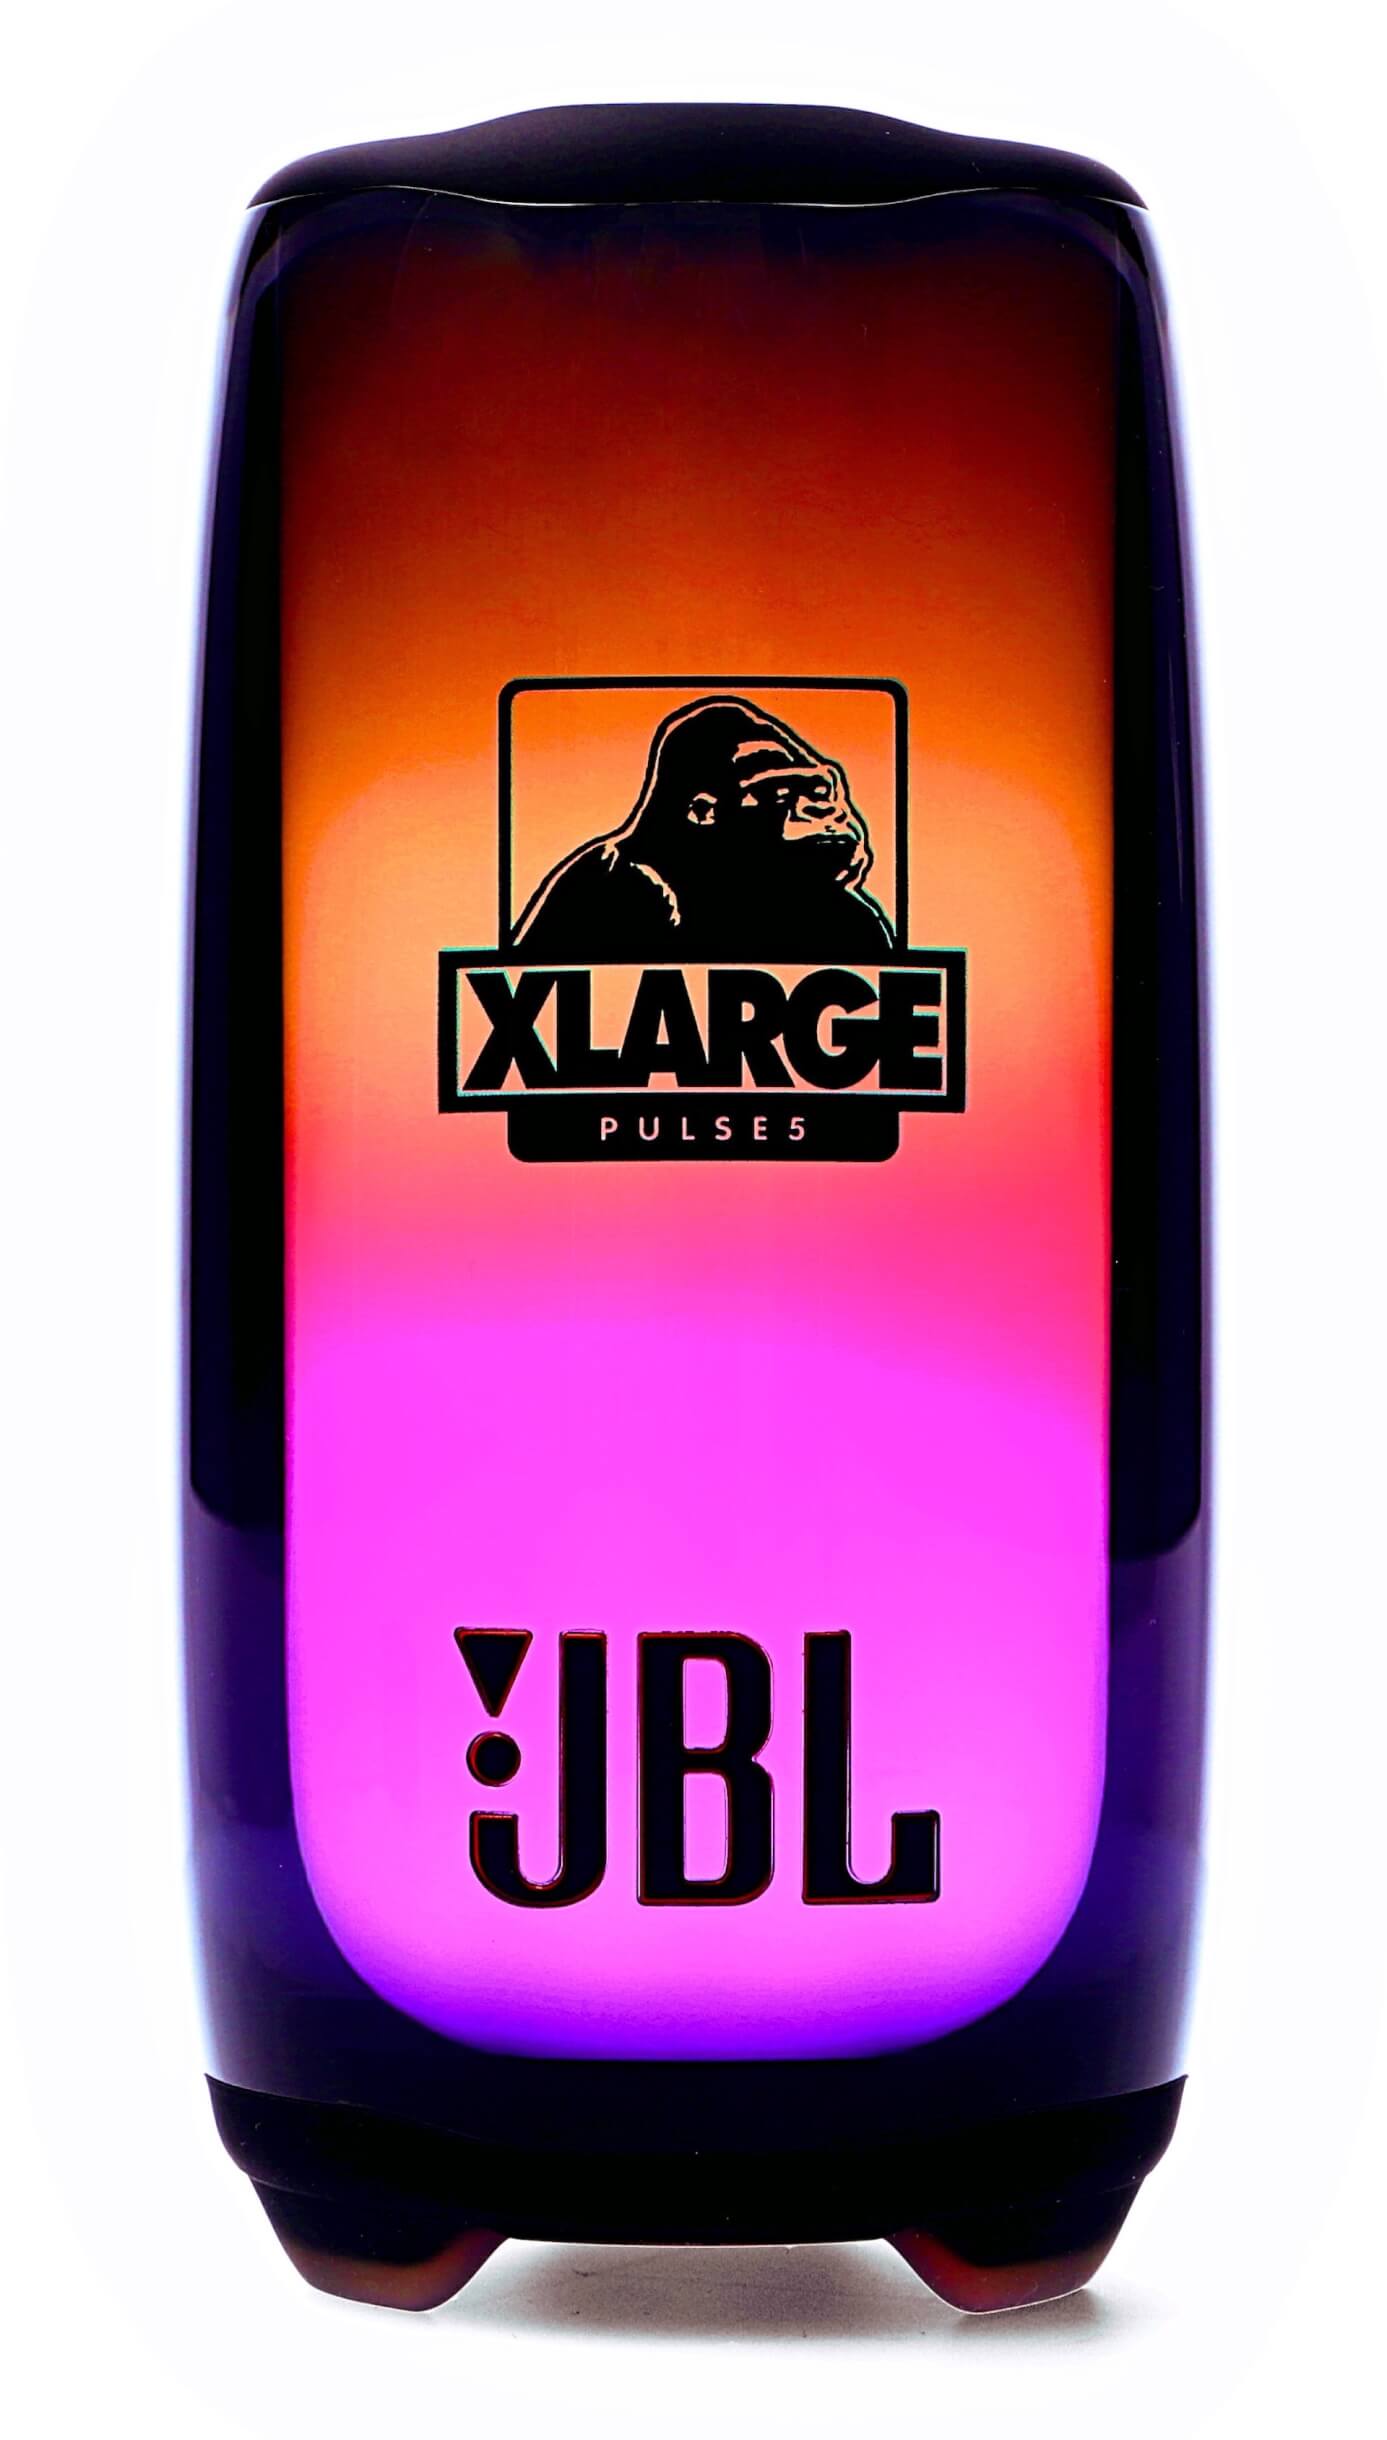 JBLとXLARGEのコラボによる「JBL PULSE 5 XLARGE Special Edition」期間限定で受注生産販売｜Authorityのオリジナル楽曲を使用したスペシャルムービー公開 lifefashion221206-jbl-xlarge2